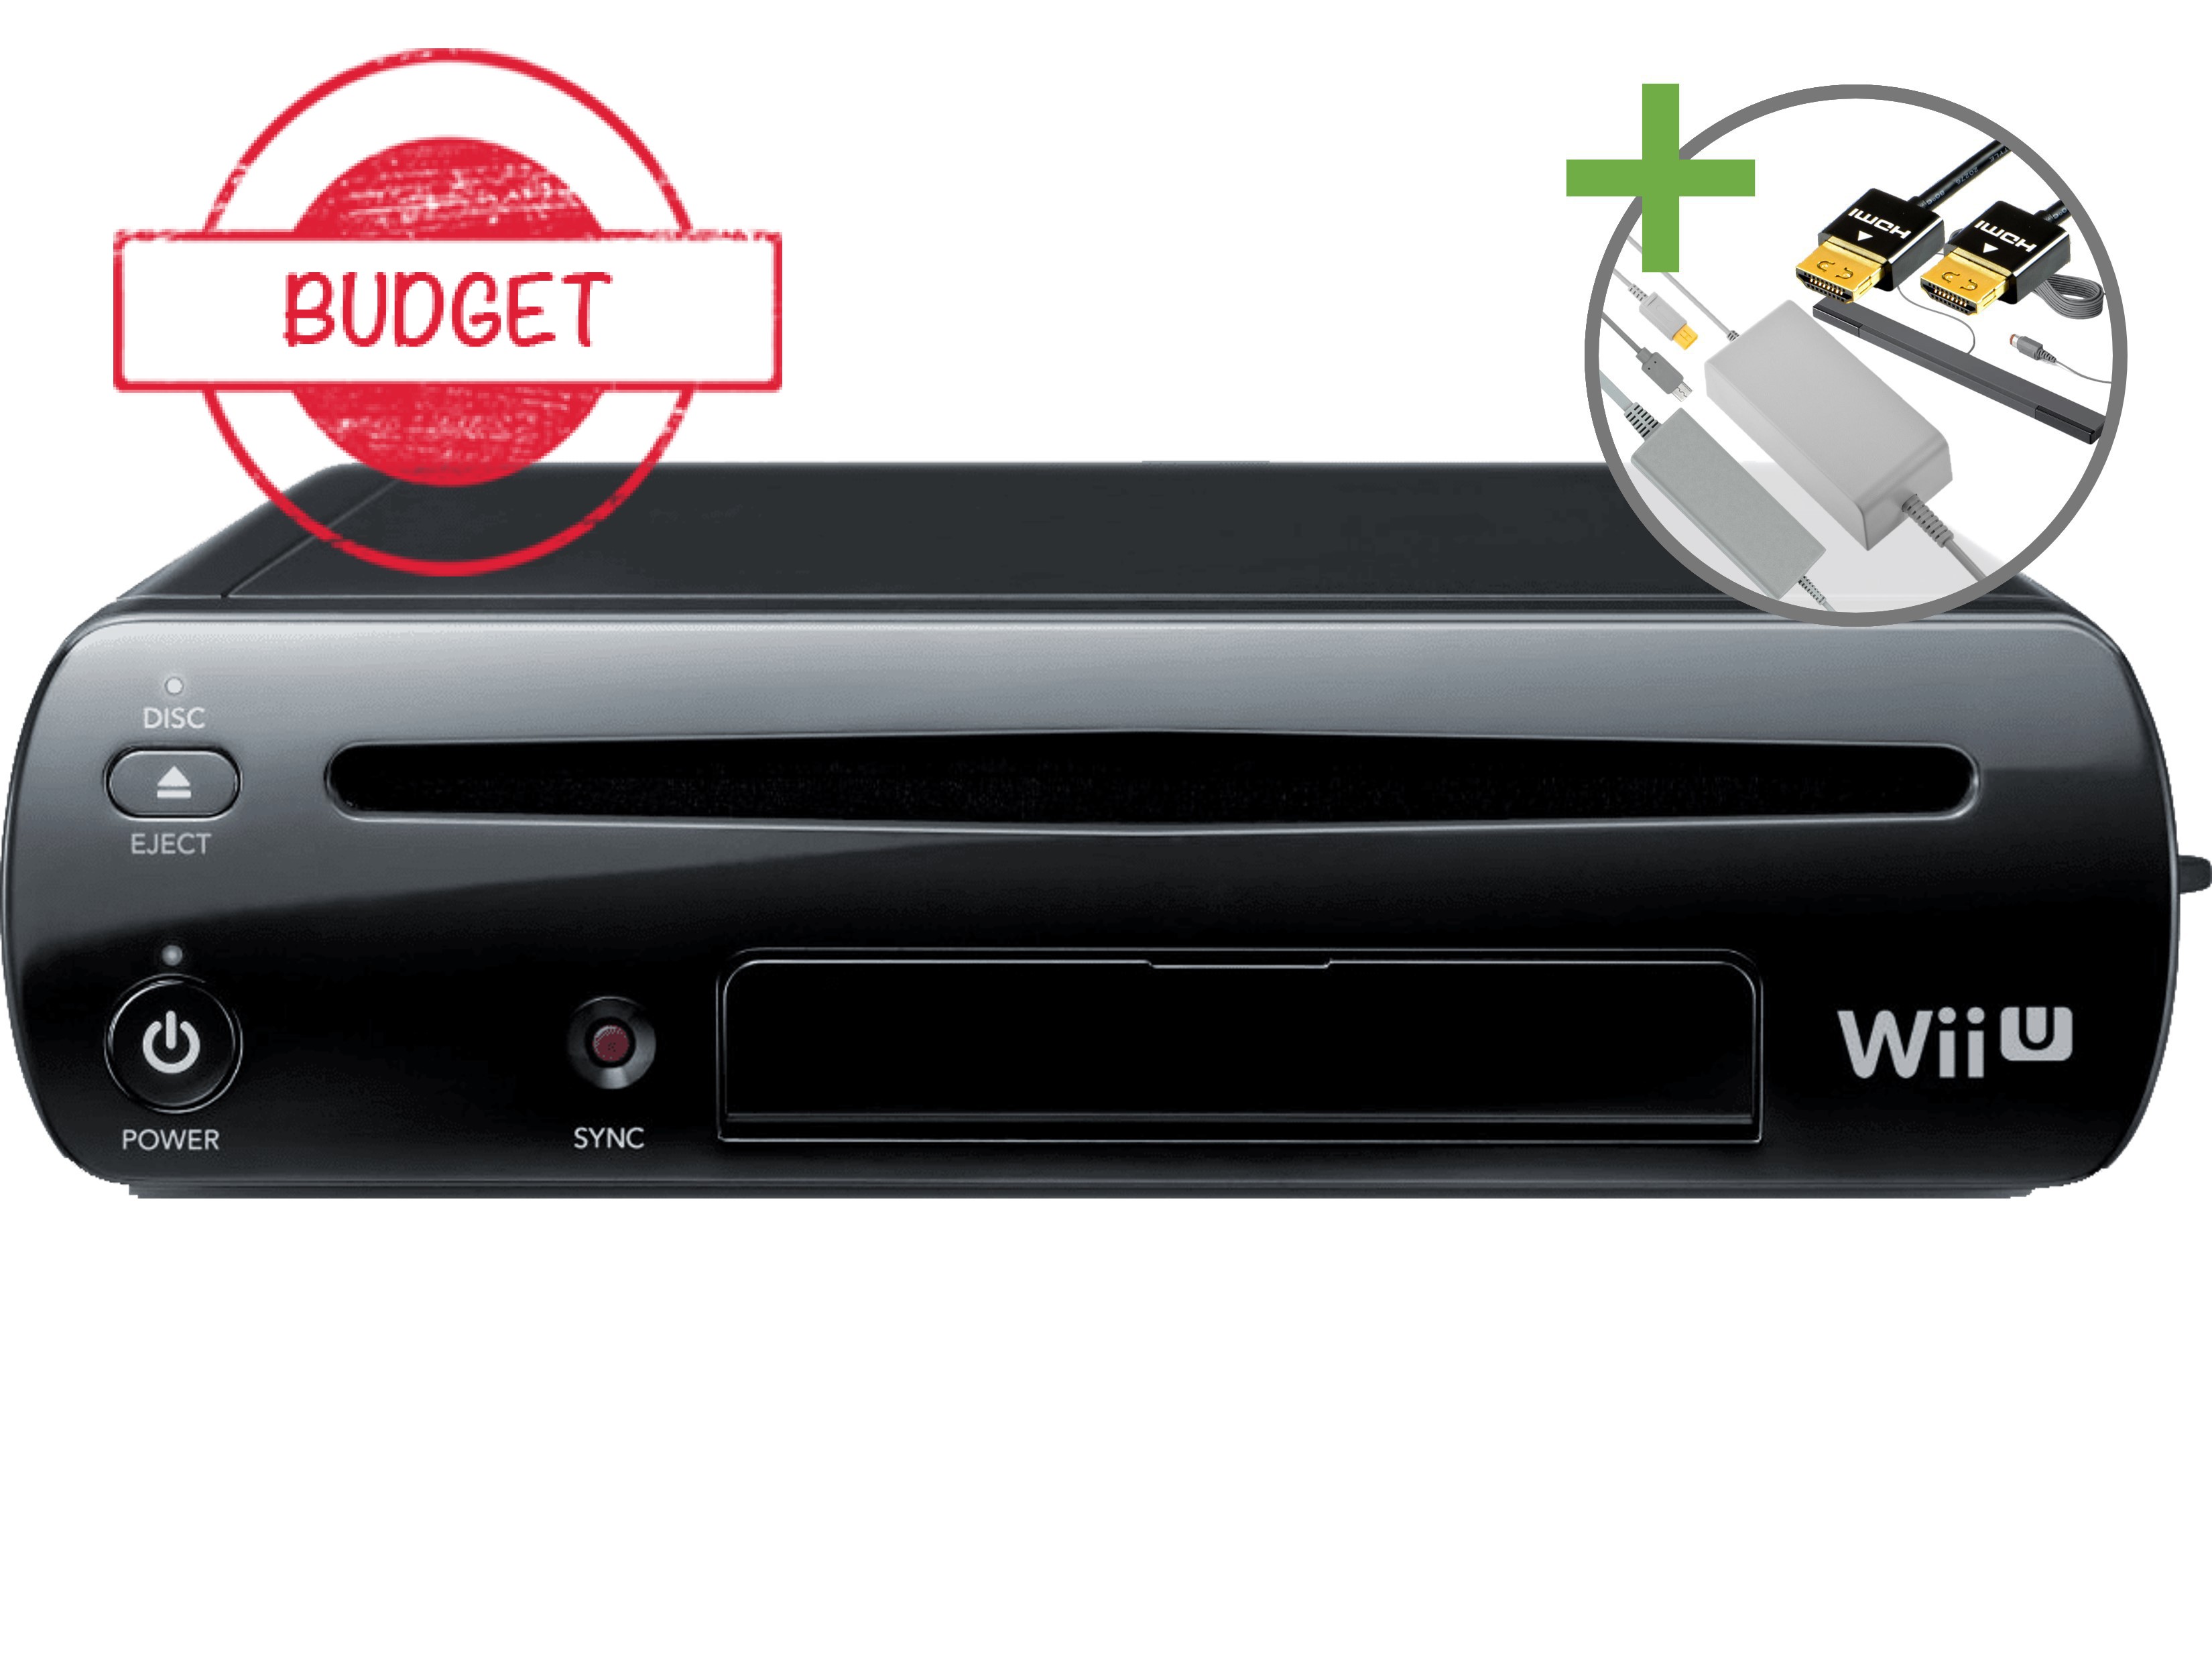 Nintendo Wii U Starter Pack - Deluxe Set Edition - Budget - Wii U Hardware - 3